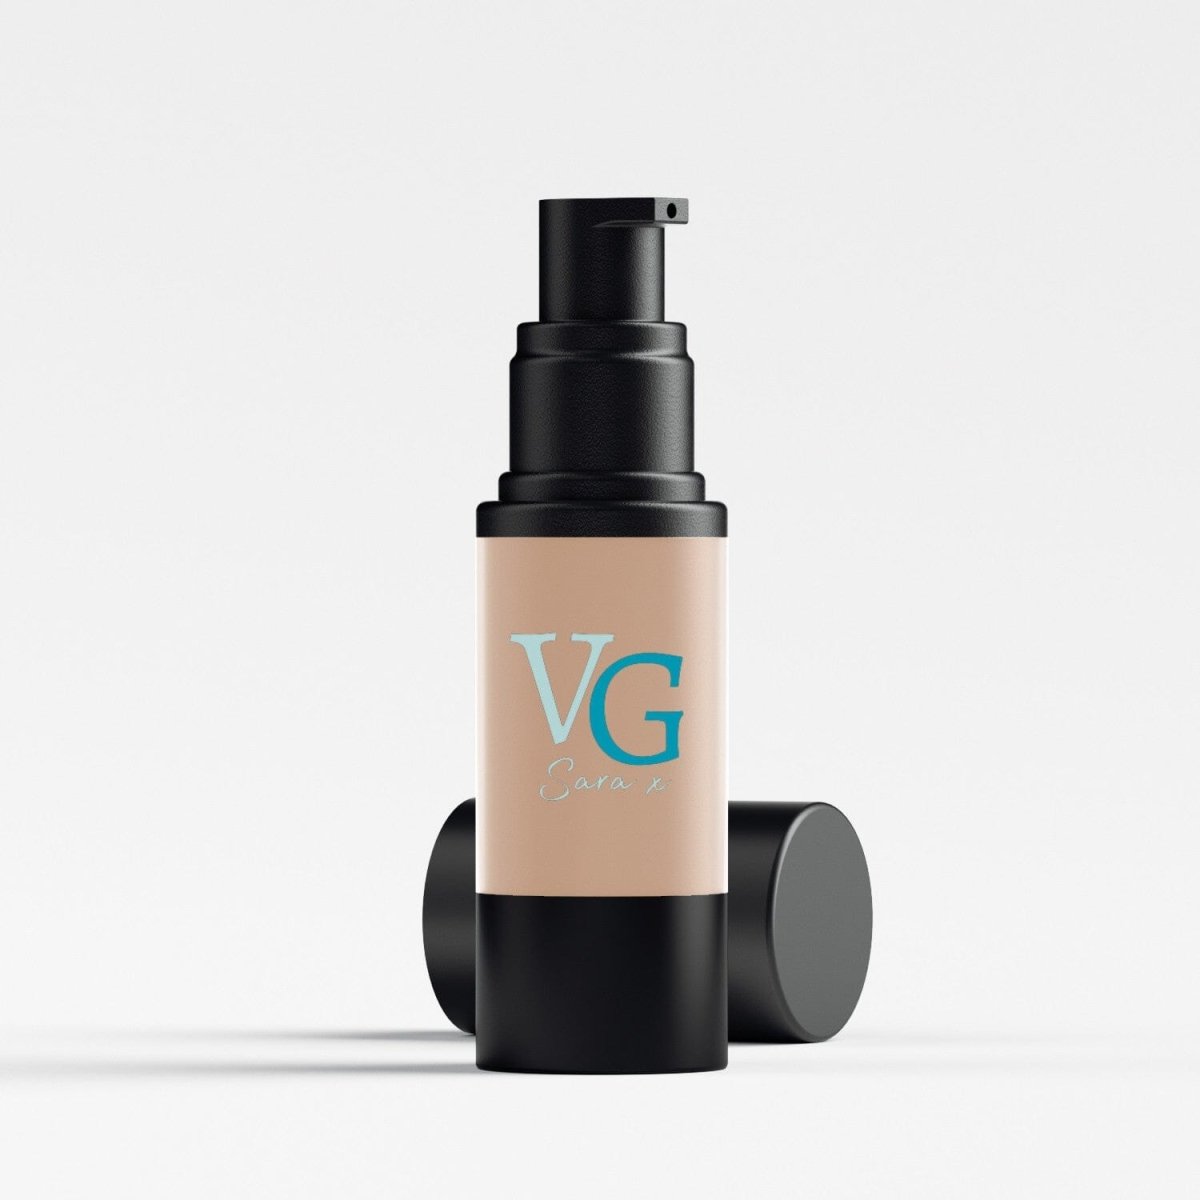 Bottle of VG Cosmetics BB Cream designed for blemish coverage